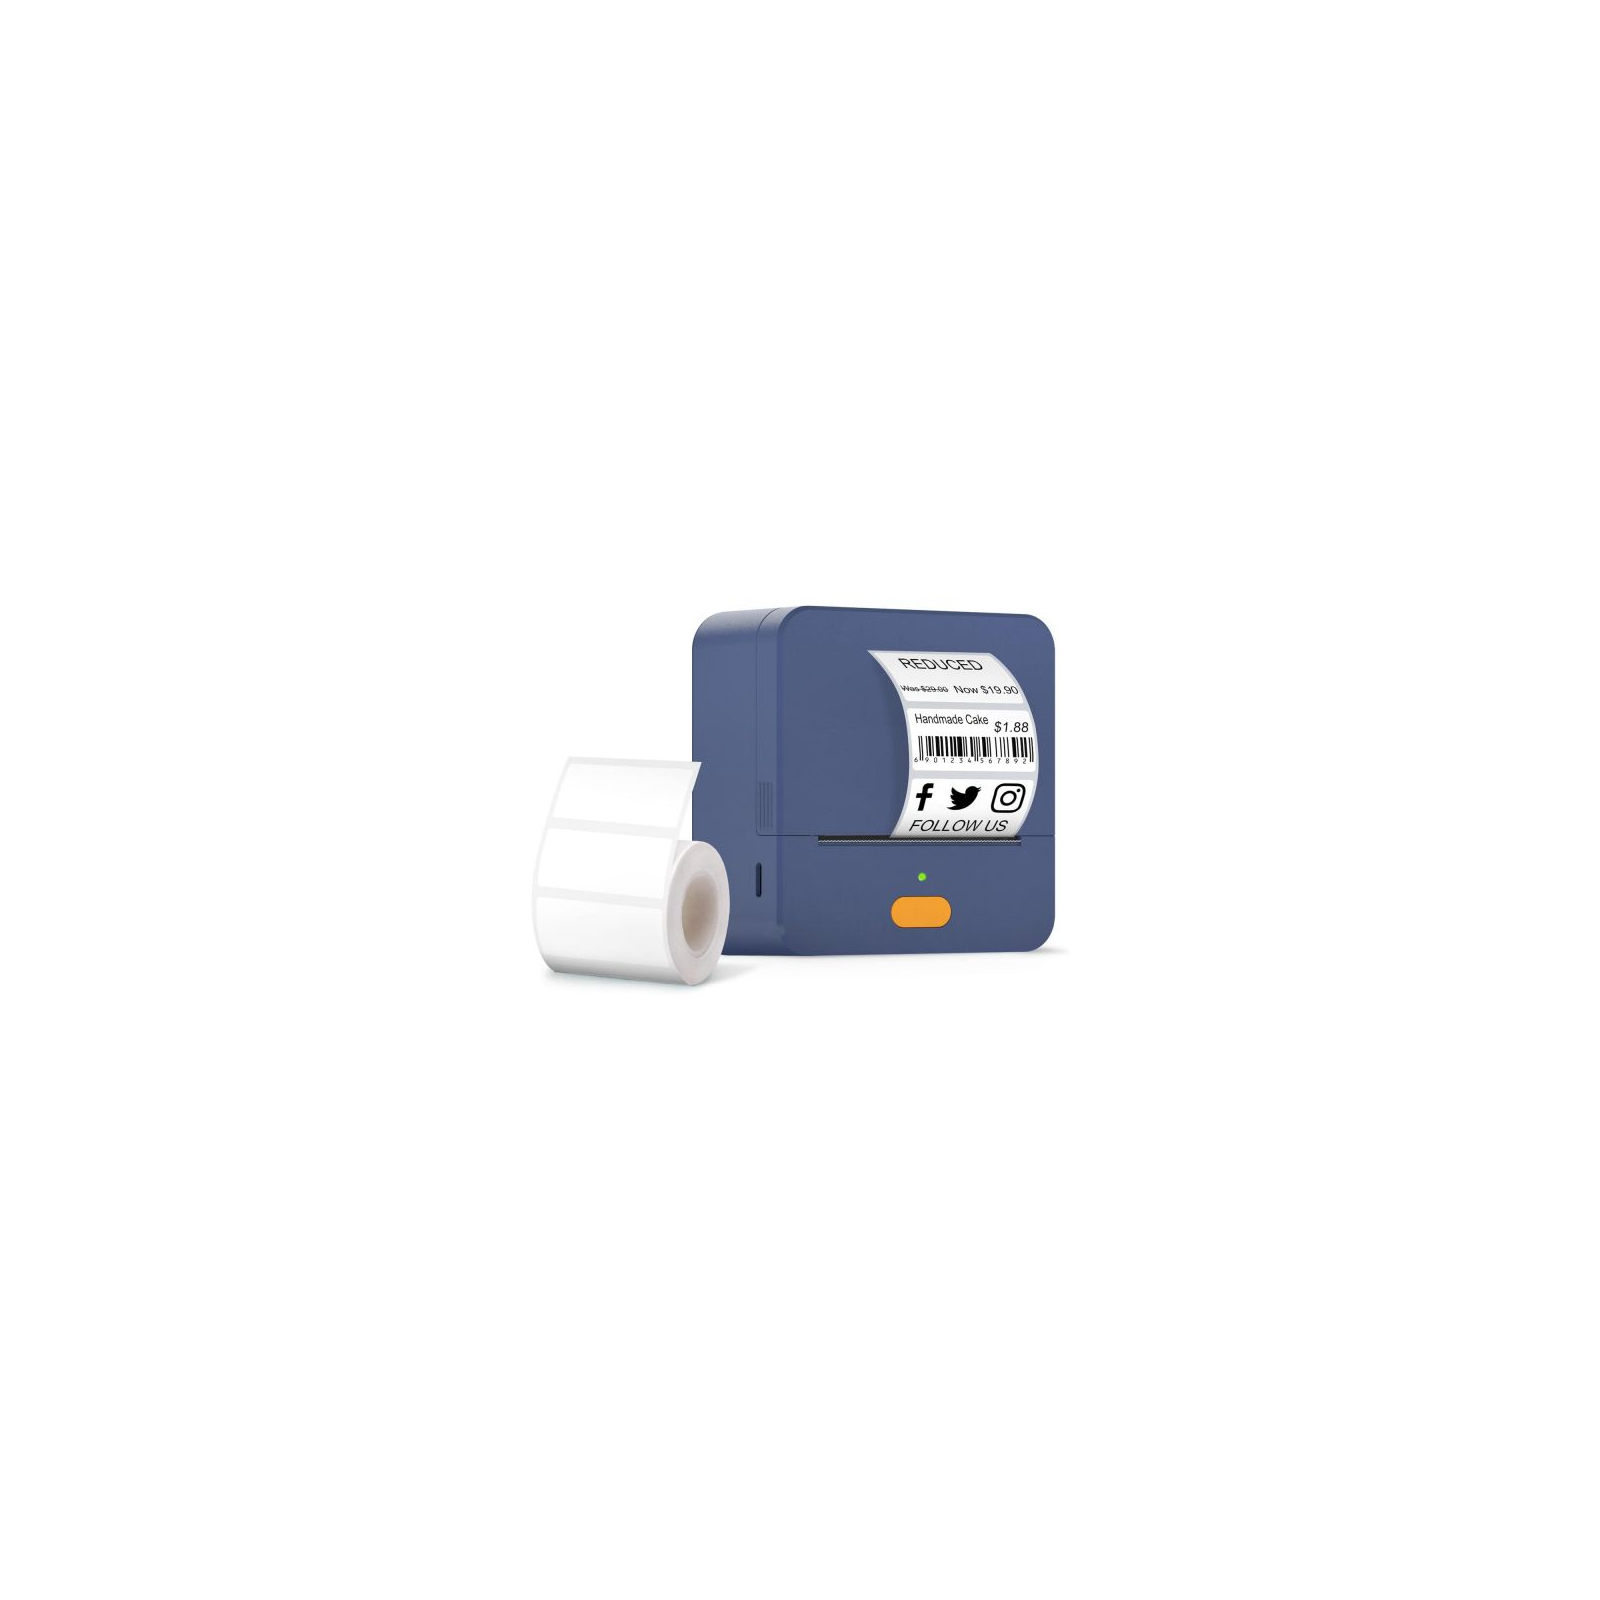 Принтер етикеток UKRMARK UP1BL bluetooth, USB, синій (900773)